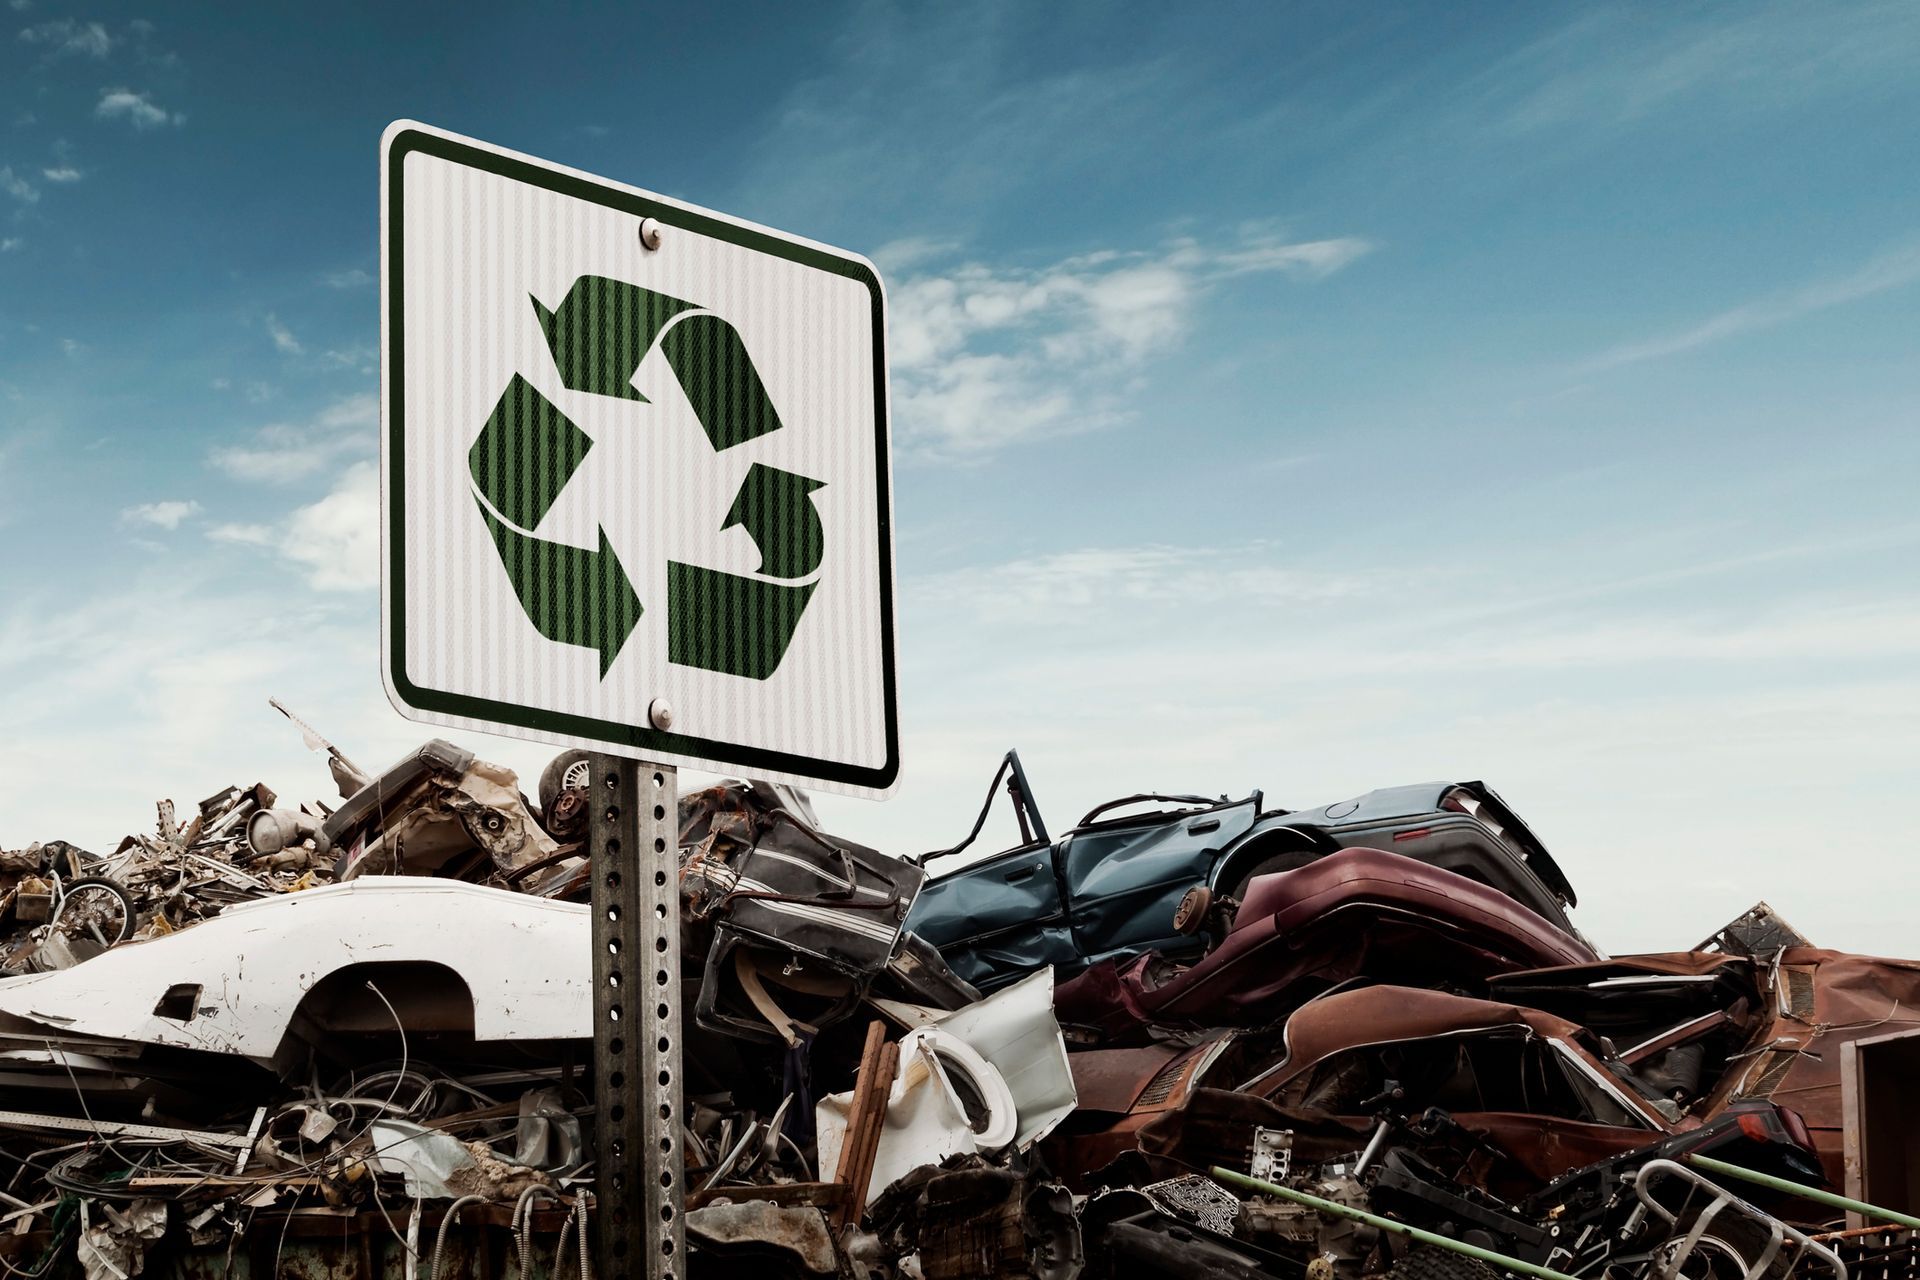 Scrap metal recycling yard of crushed cars – Harvey, IL - Cash 4 Junk Scrap Cars